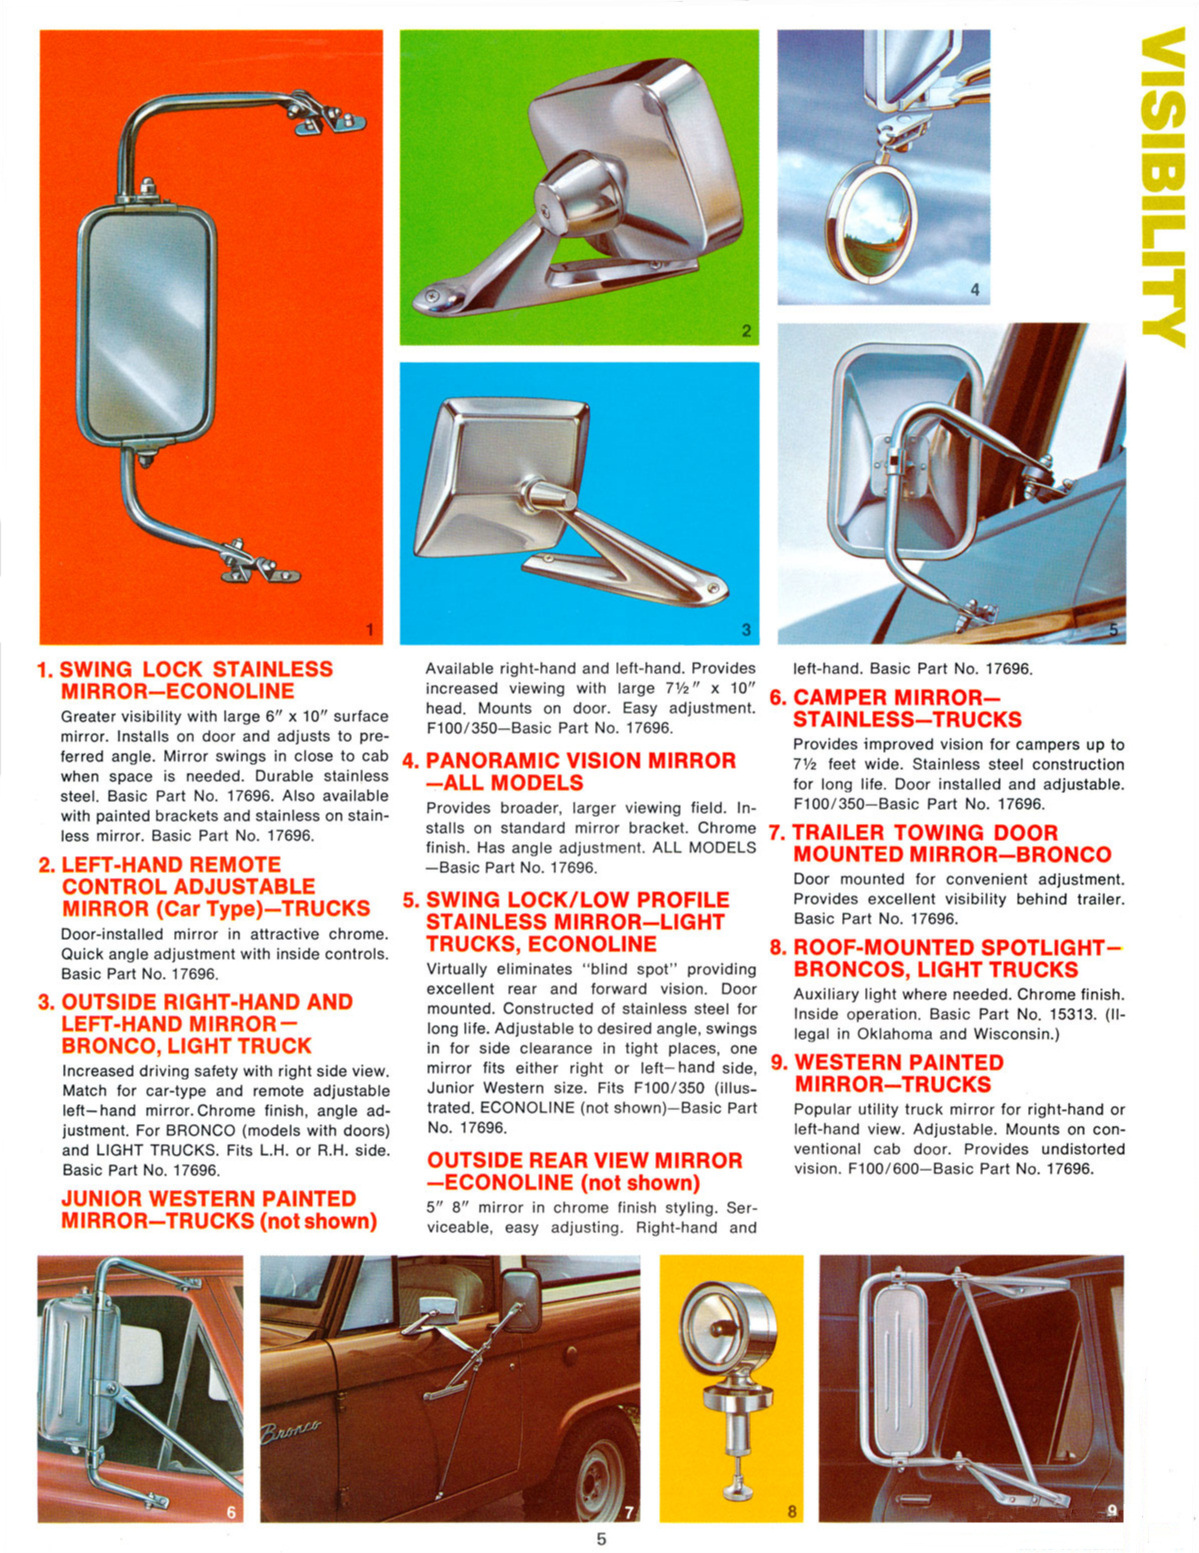 n_1974 Ford Triuck Accessories-05.jpg